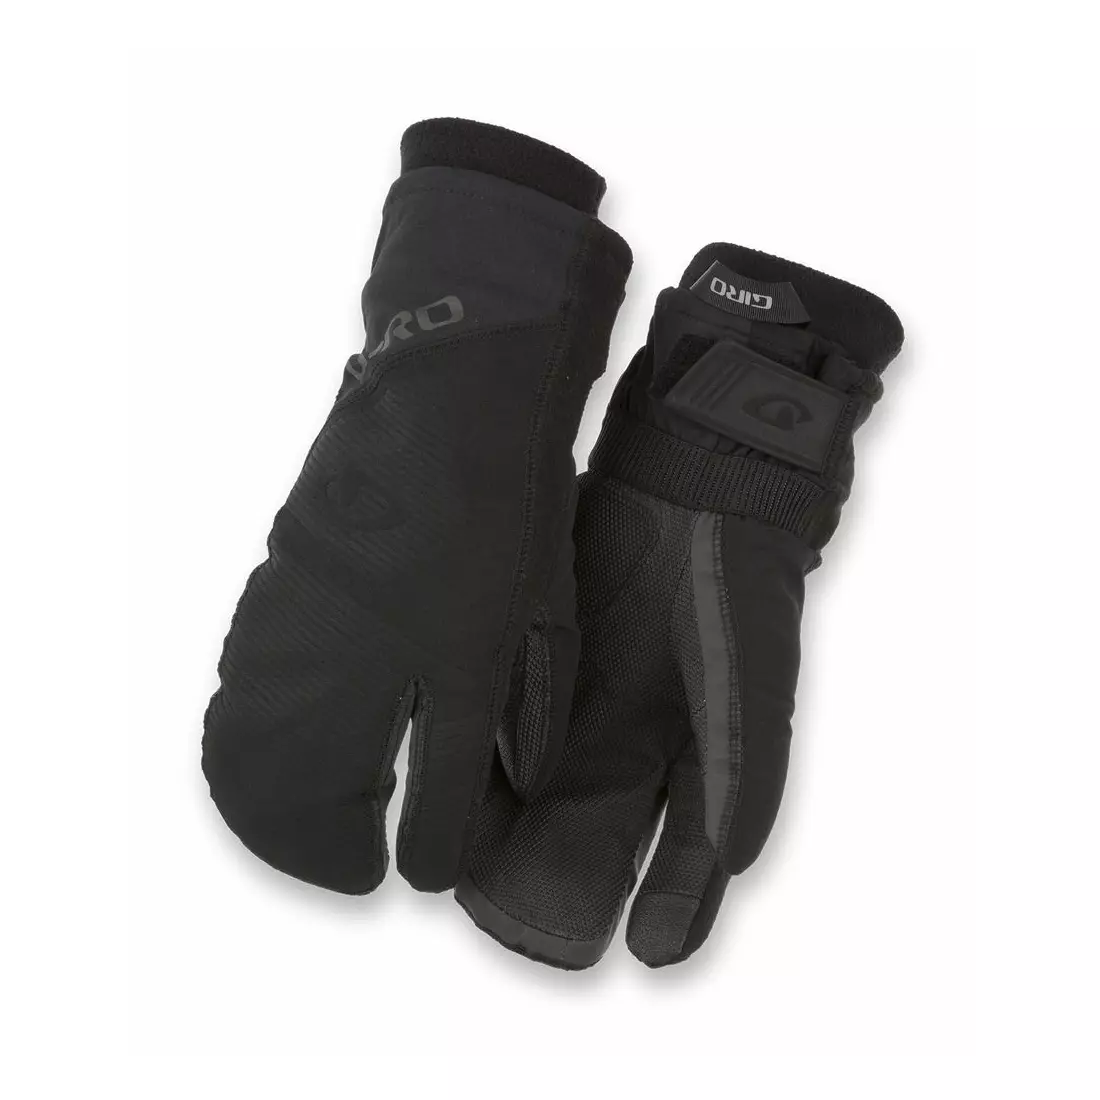 GIRO winter cycling gloves 100 PROOF black GR-7097440